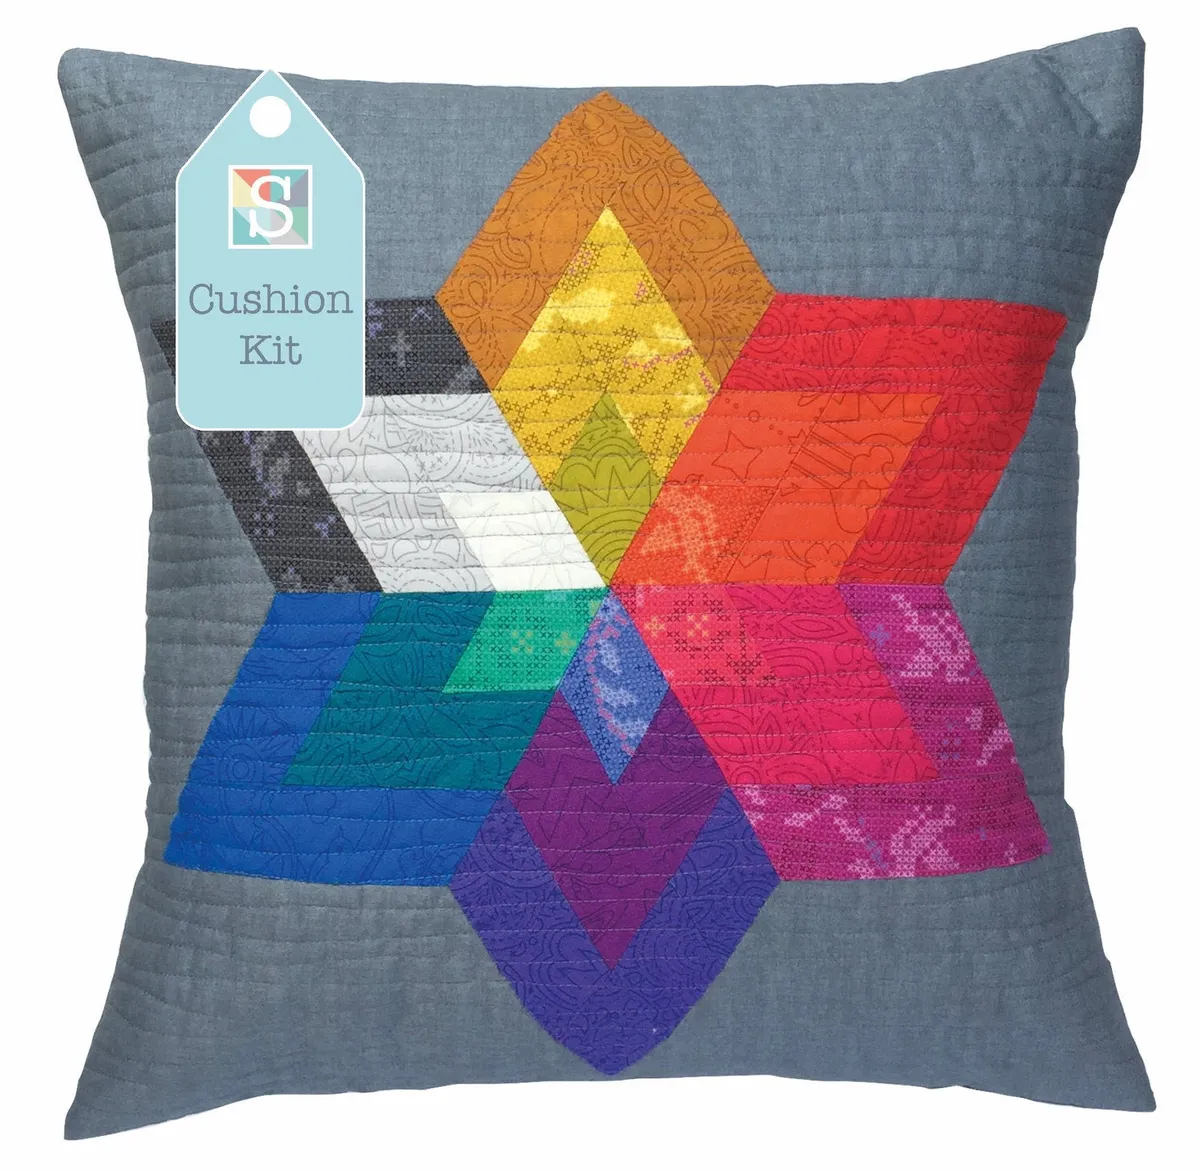 Diamond star cushion sewing kit